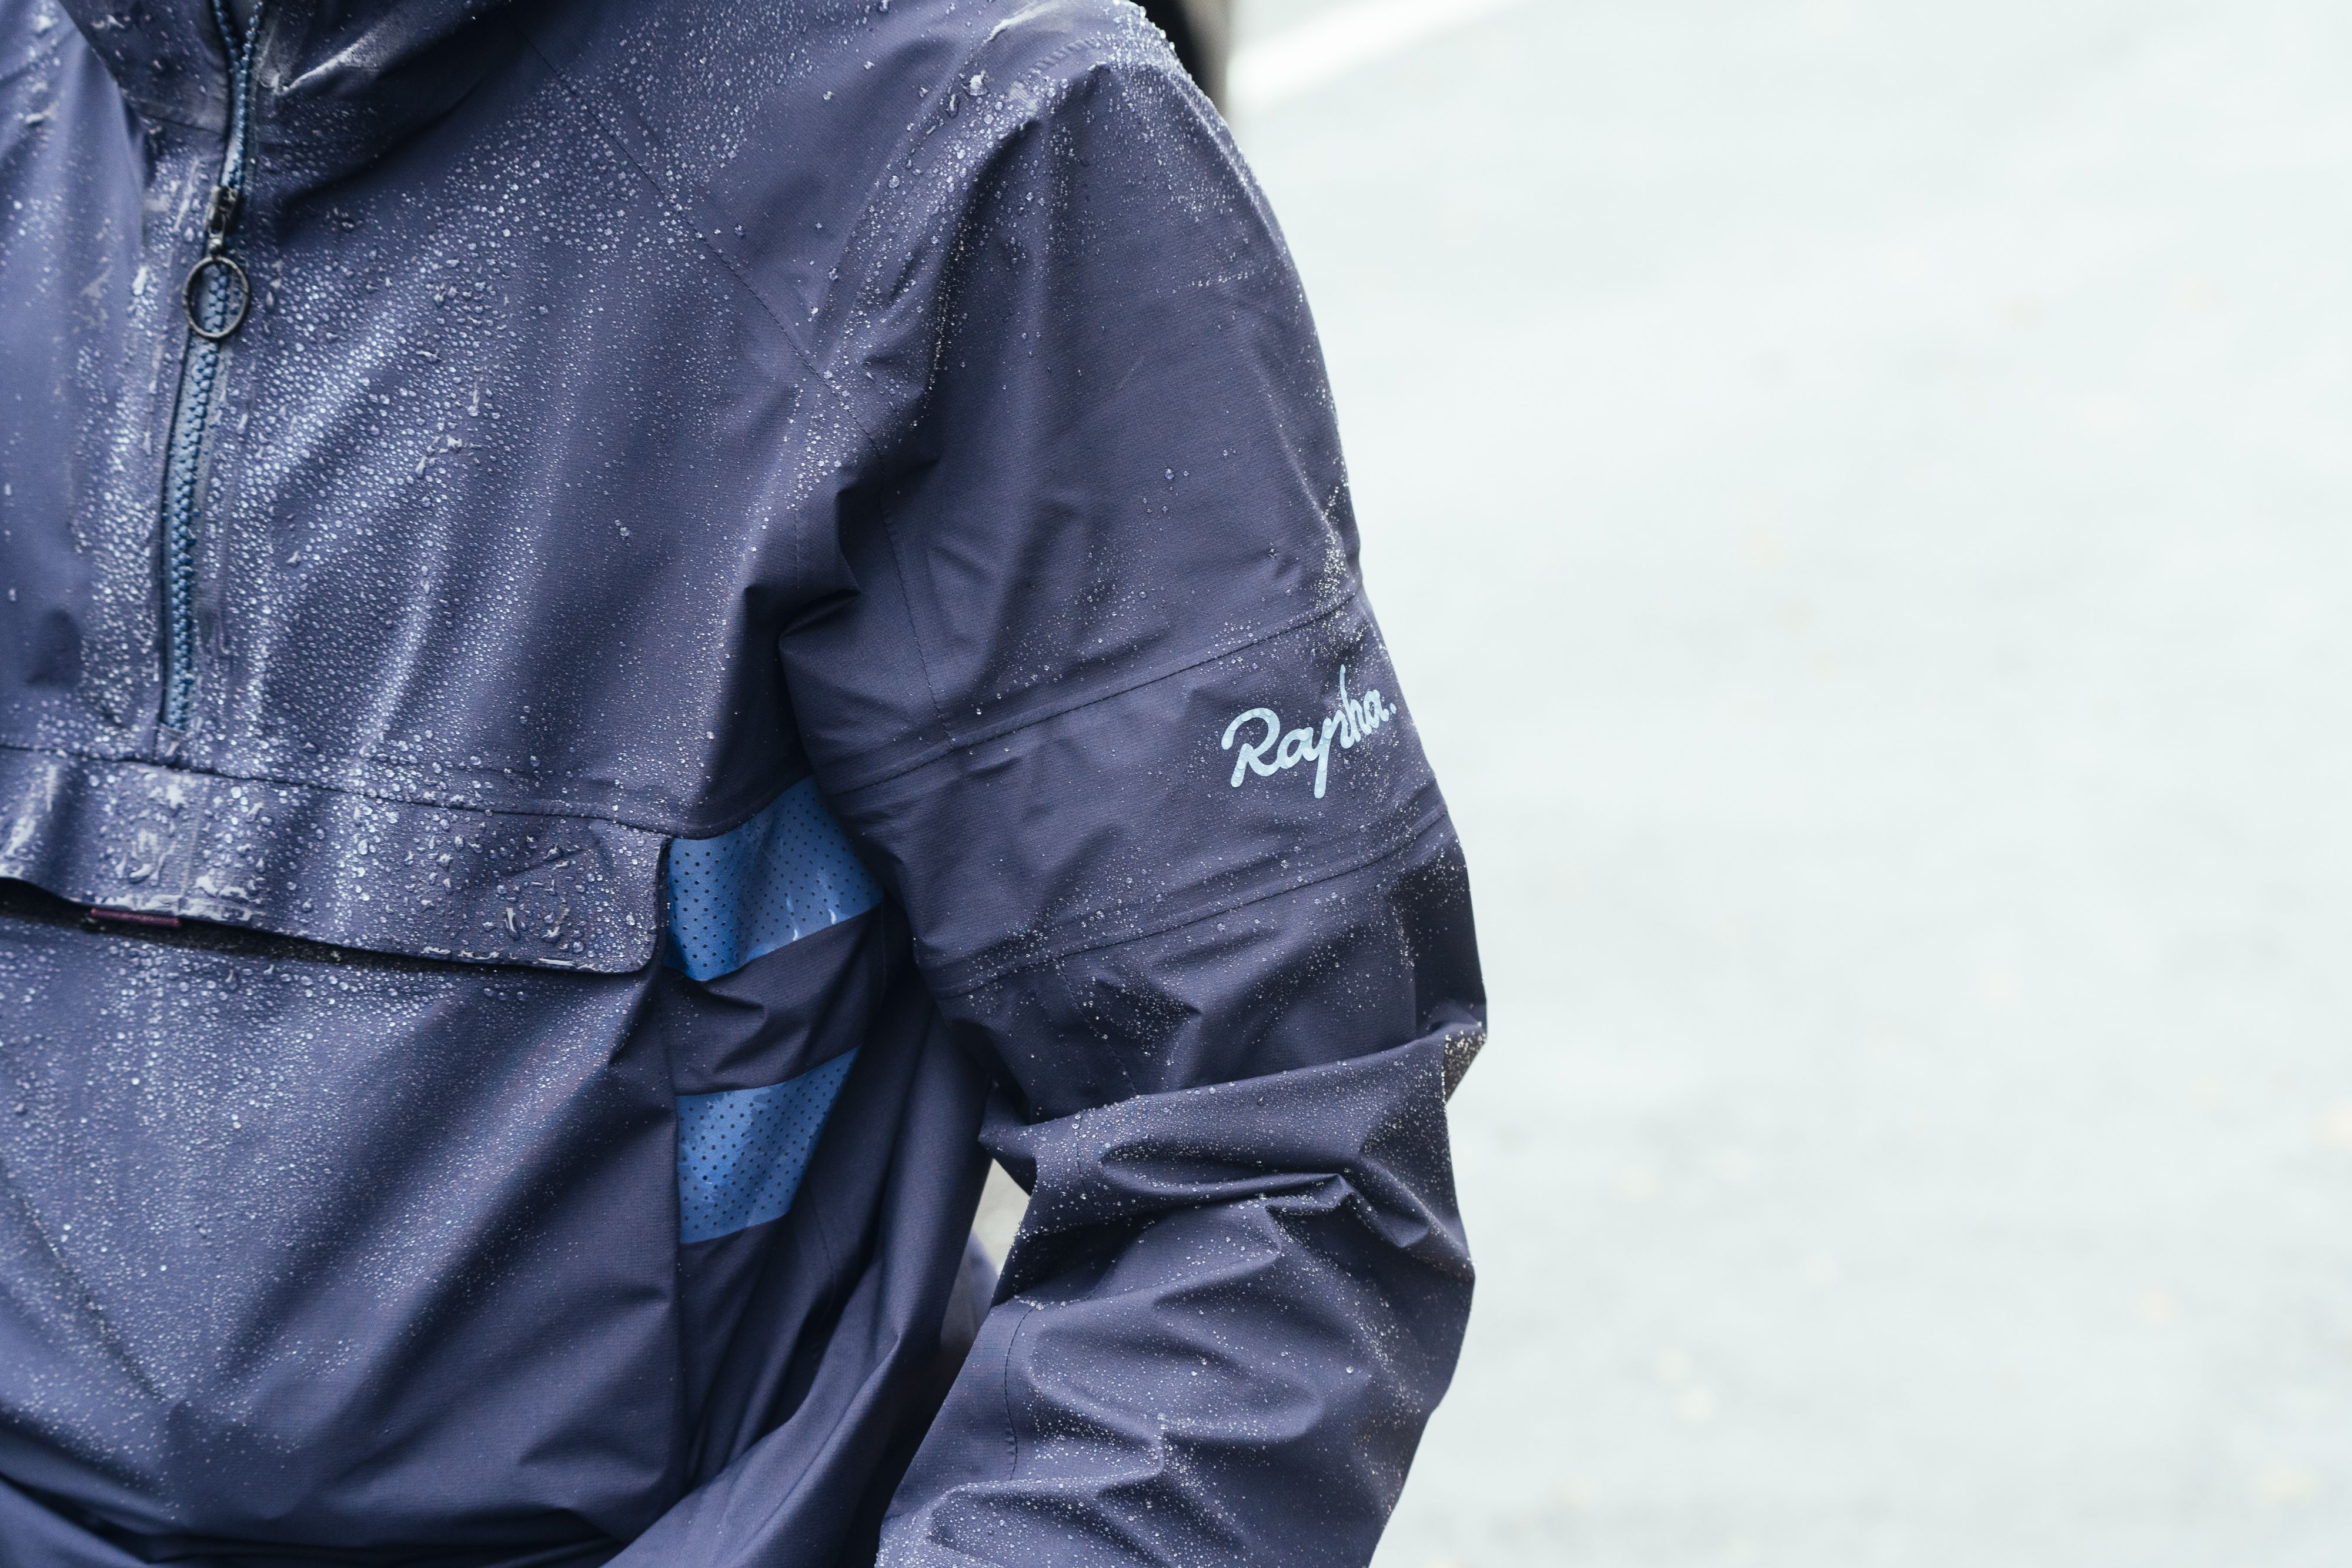 Rapha Explore Review - Waterproof Cycling Jacket